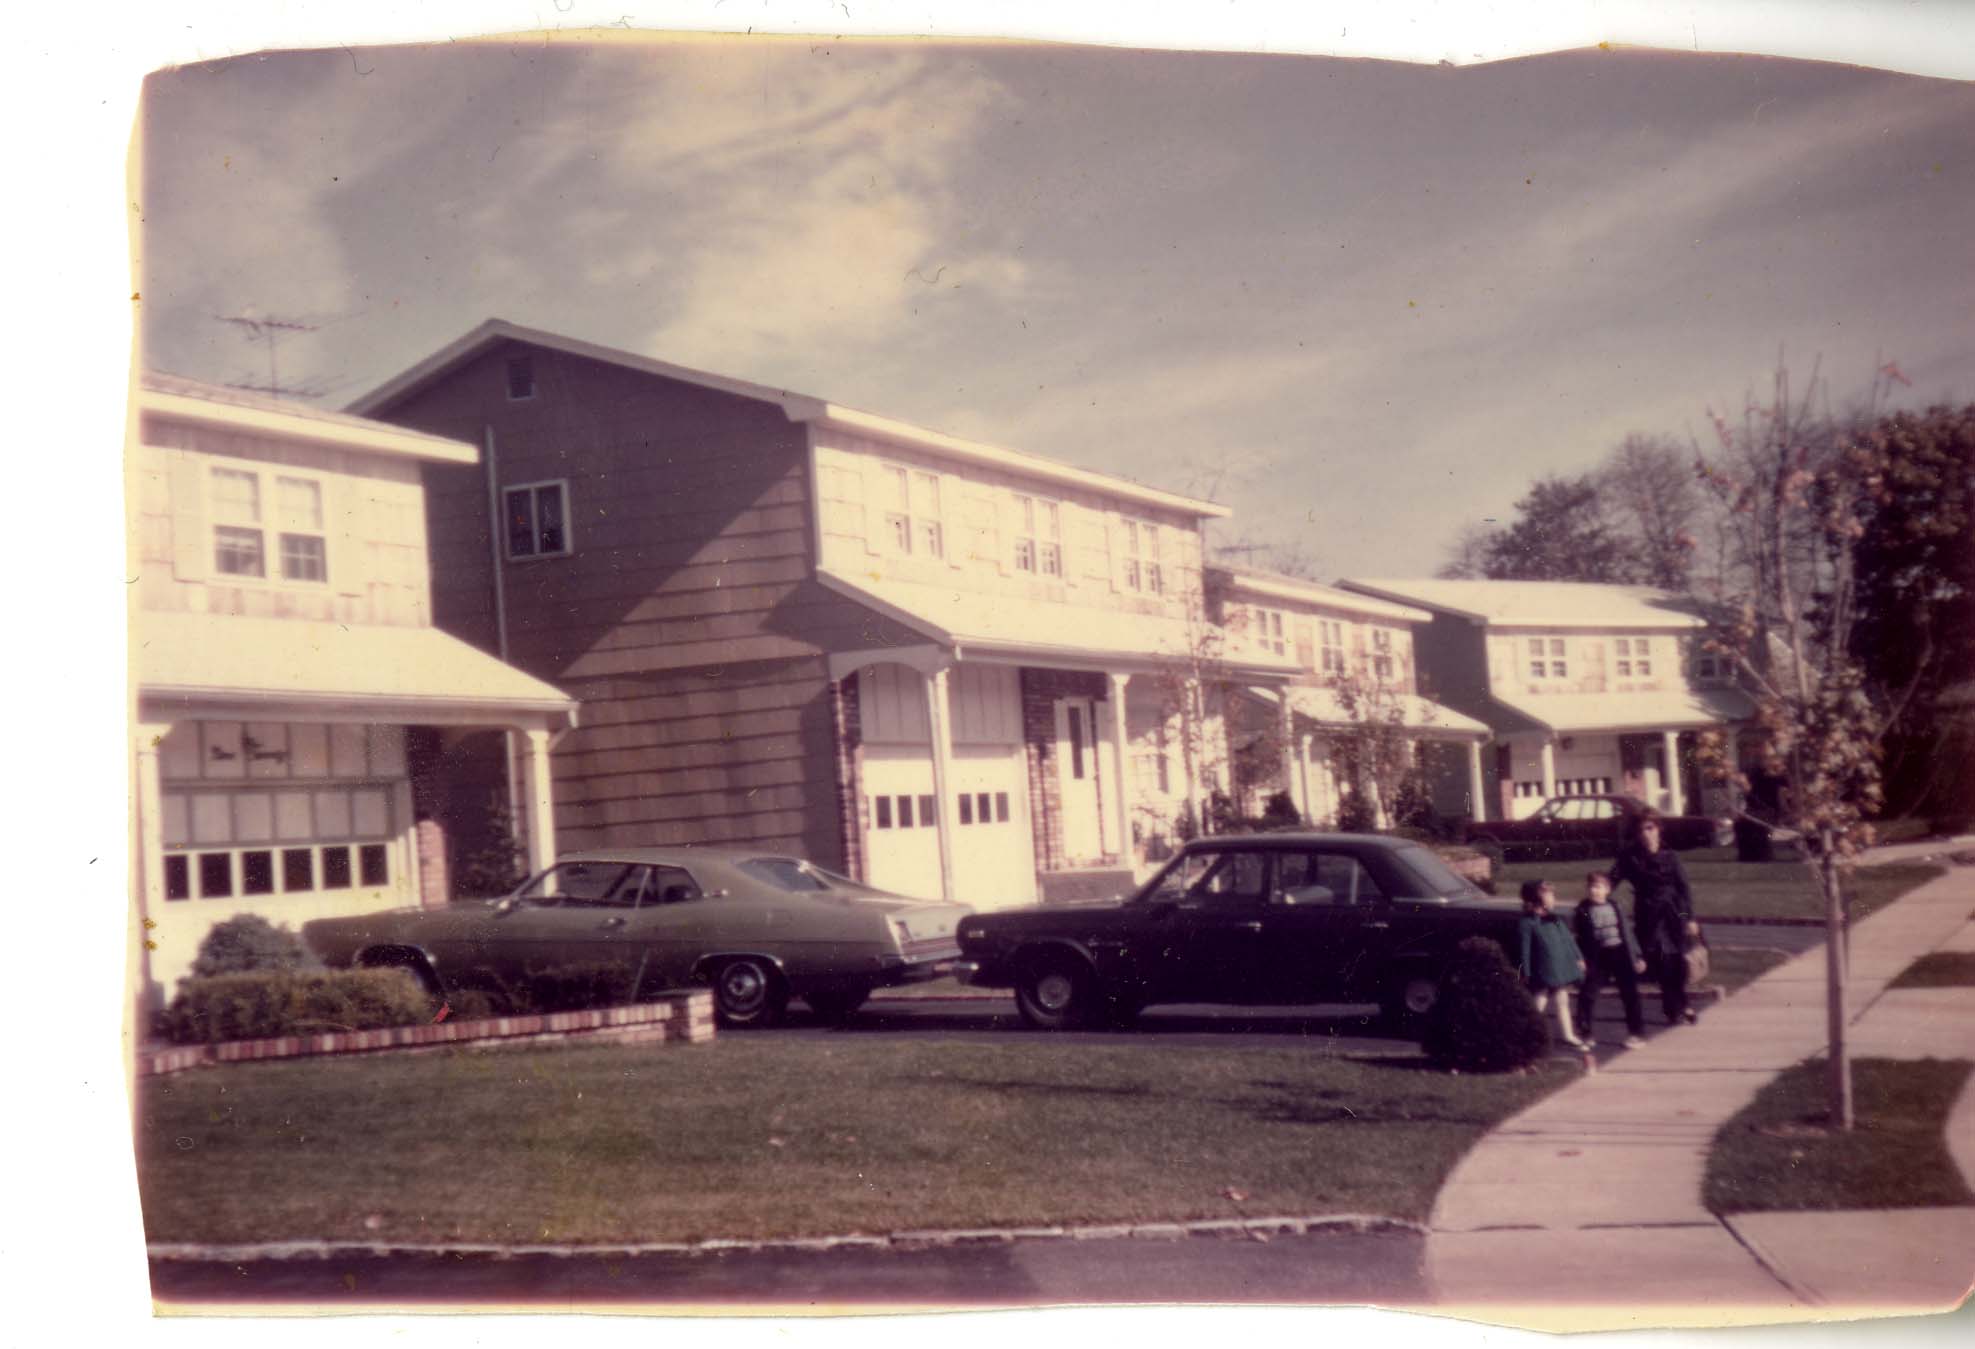 Peresecki Home with Cars circa 1970